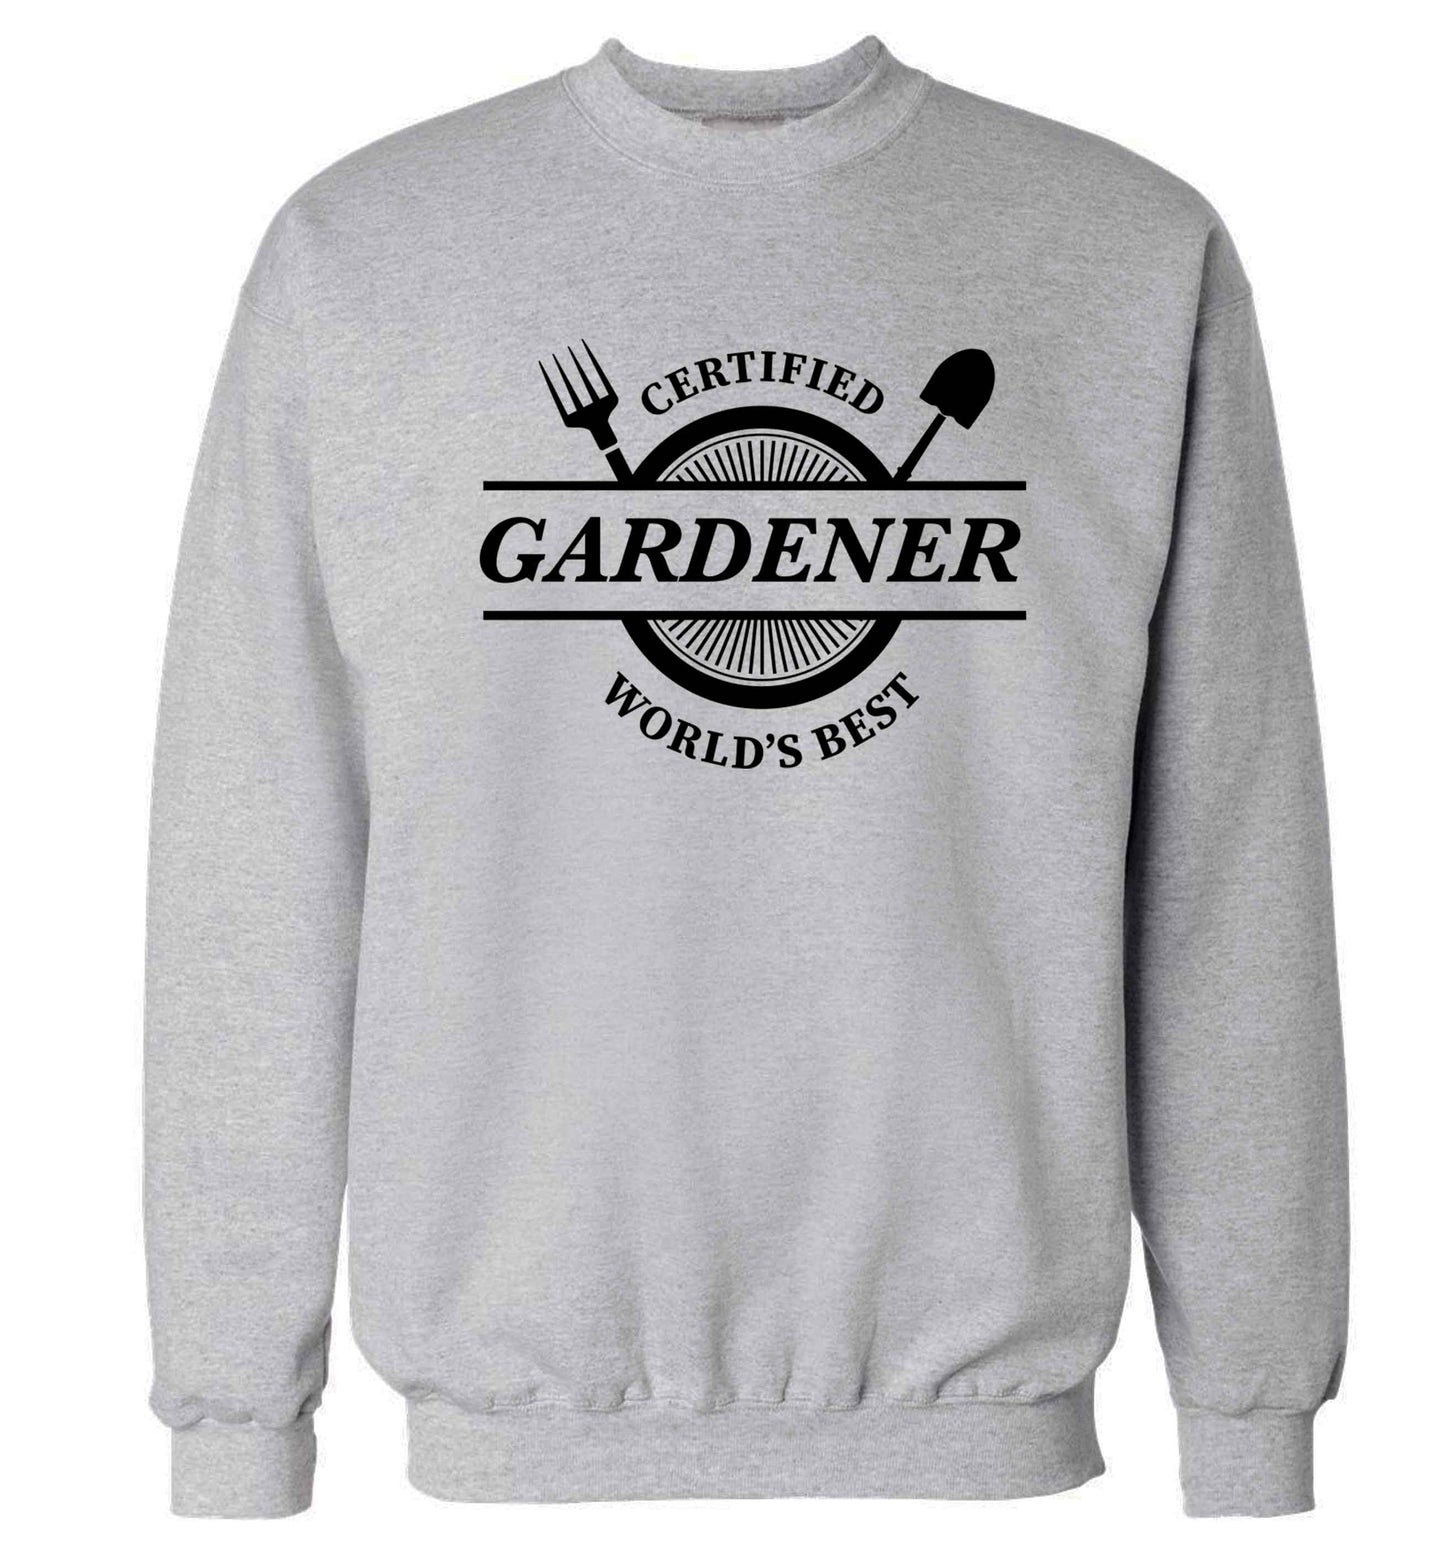 Certified gardener worlds best Adult's unisex grey Sweater 2XL